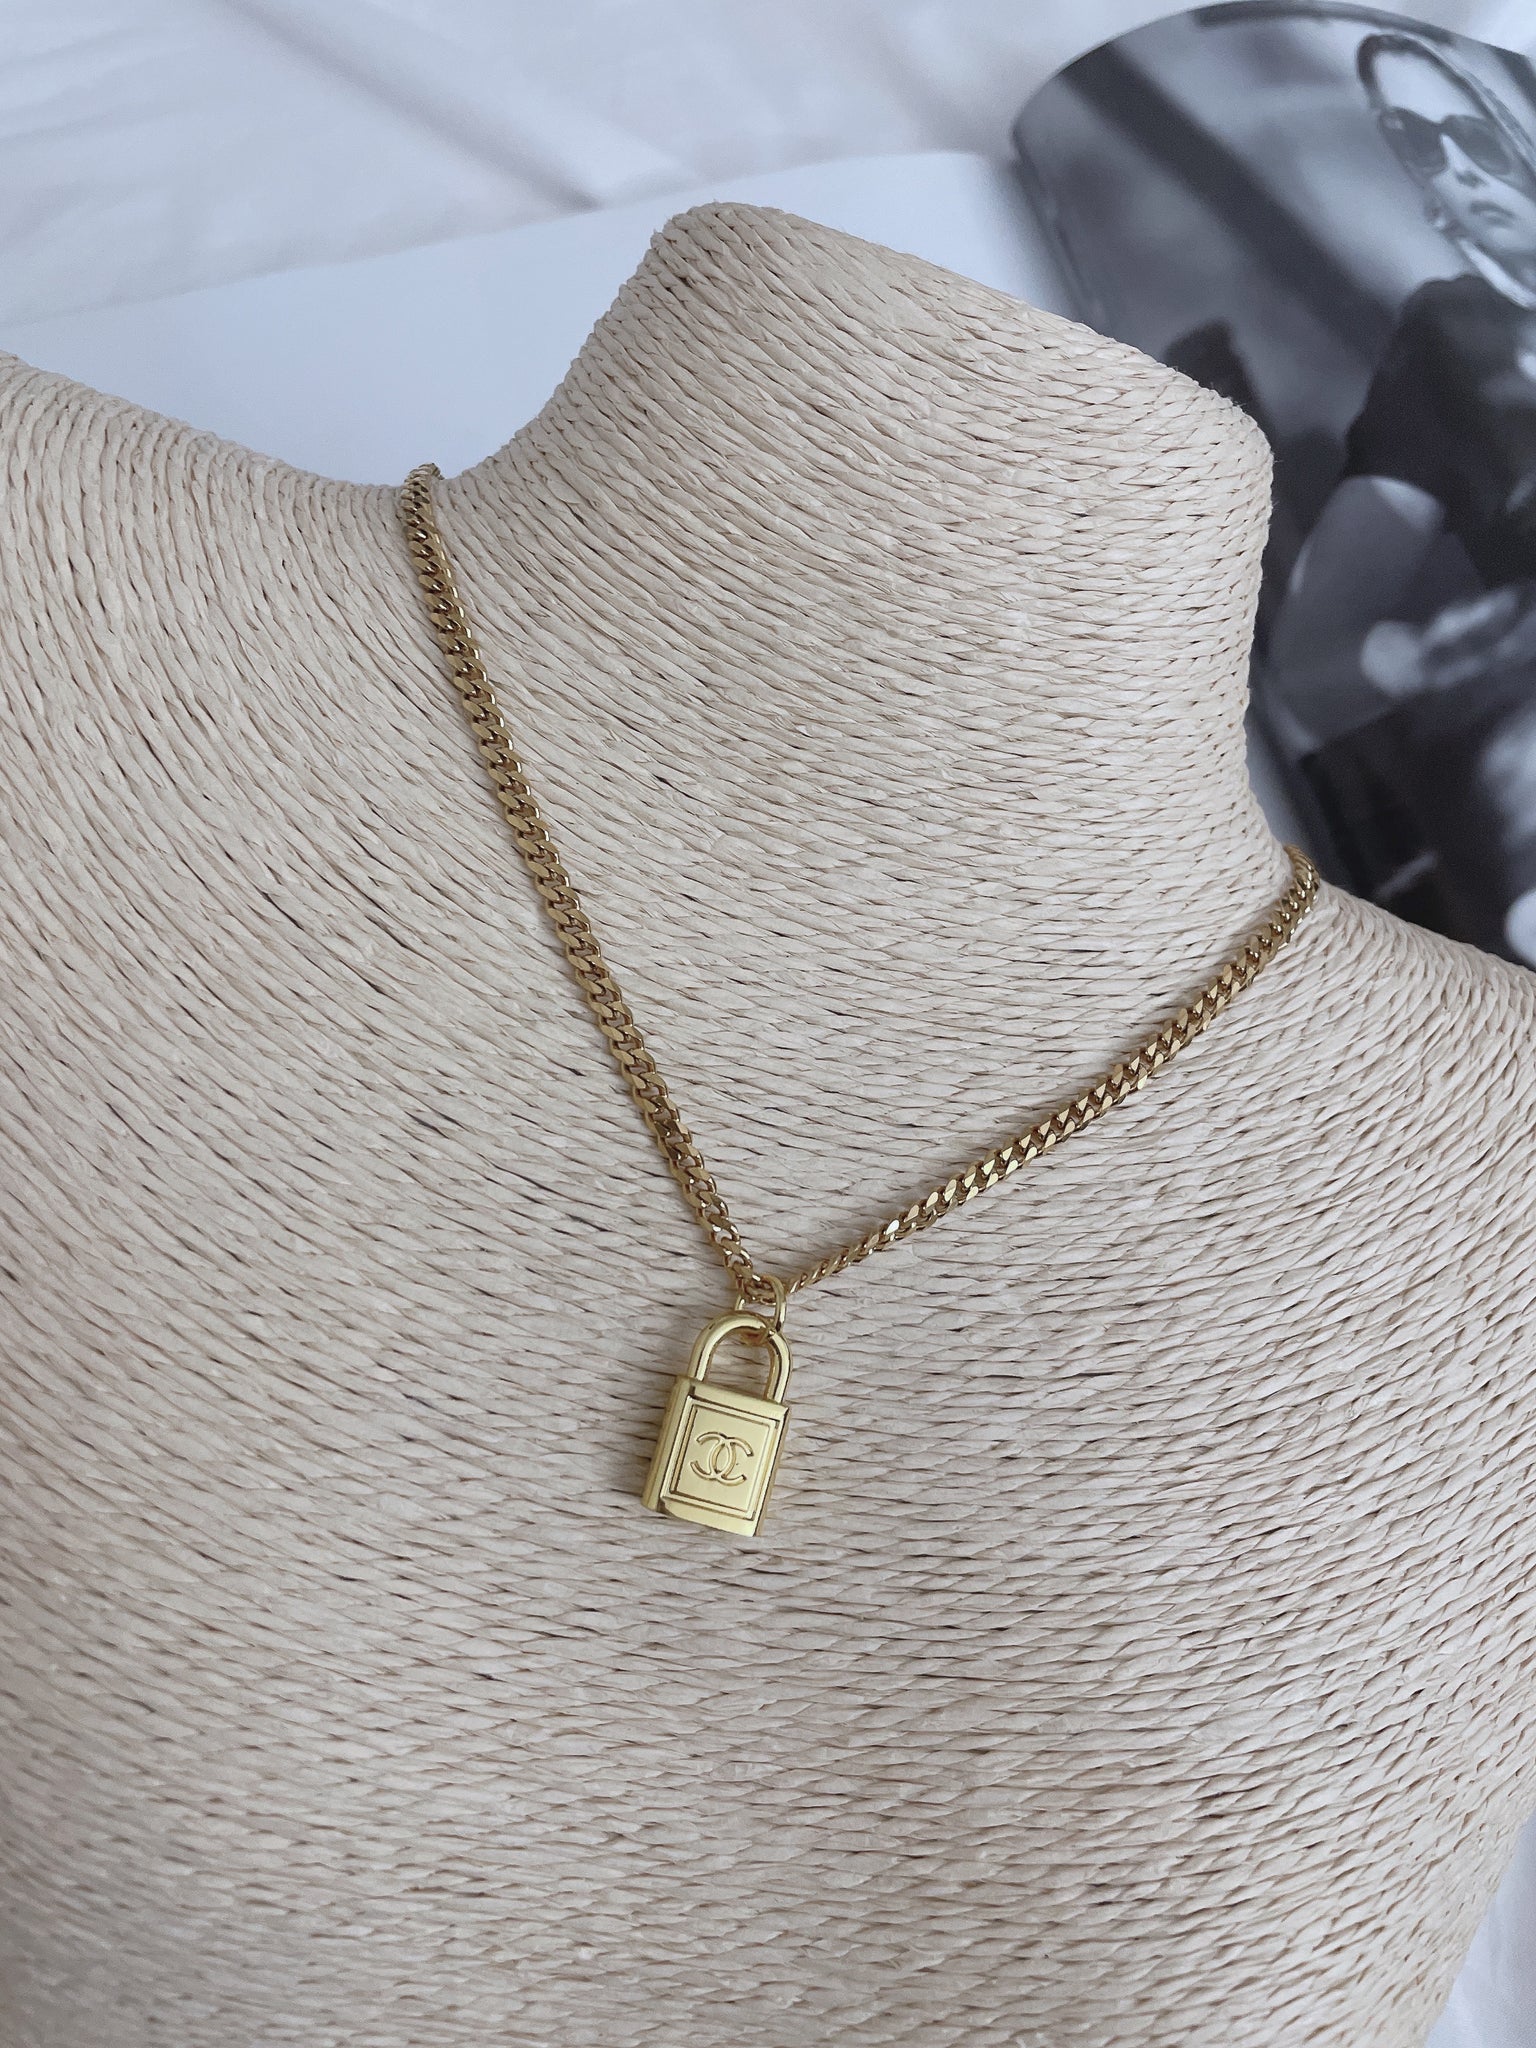 Designer Chain Necklace with Authentic Louis Vuitton Lock